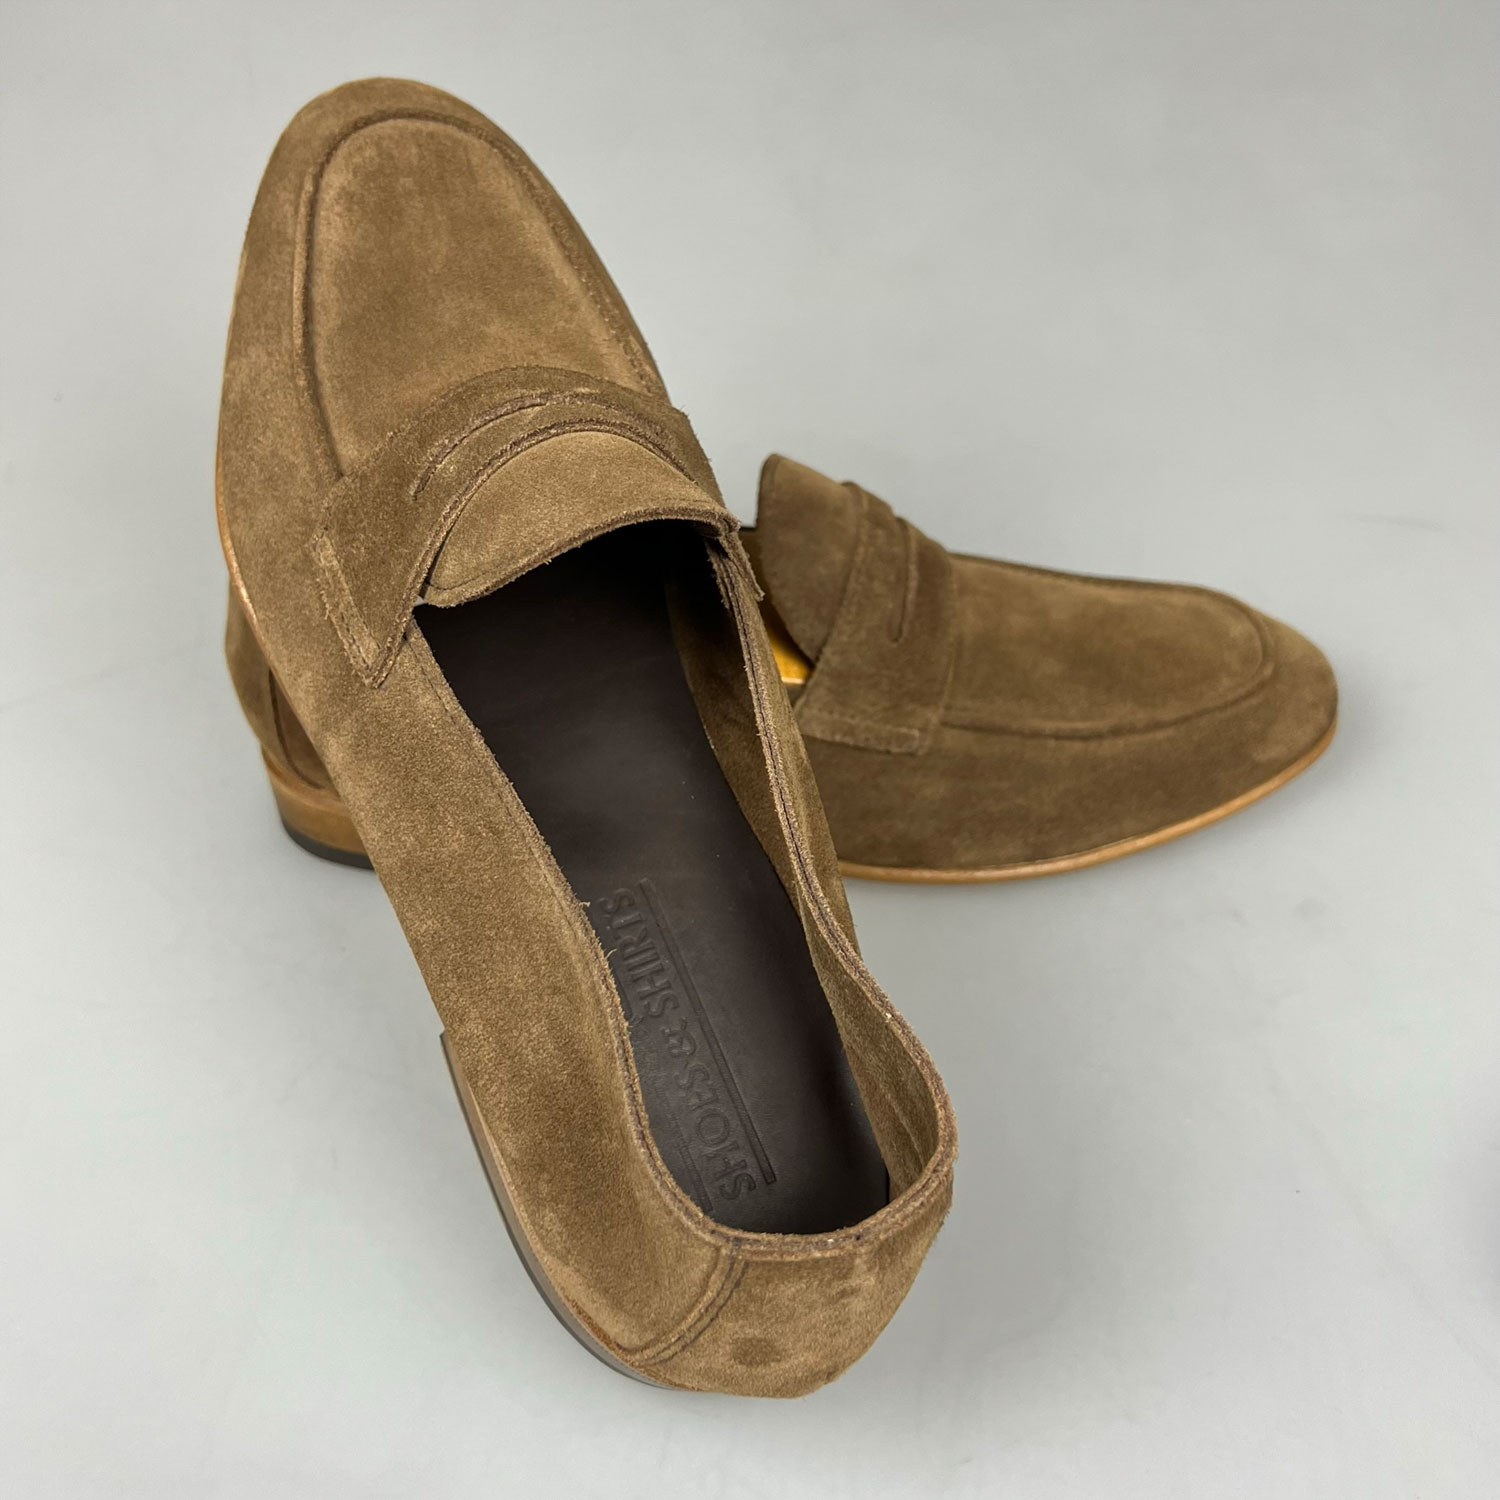 Arturo Calle | Shoes | Arturo Calle Brown Mens Shoes | Poshmark